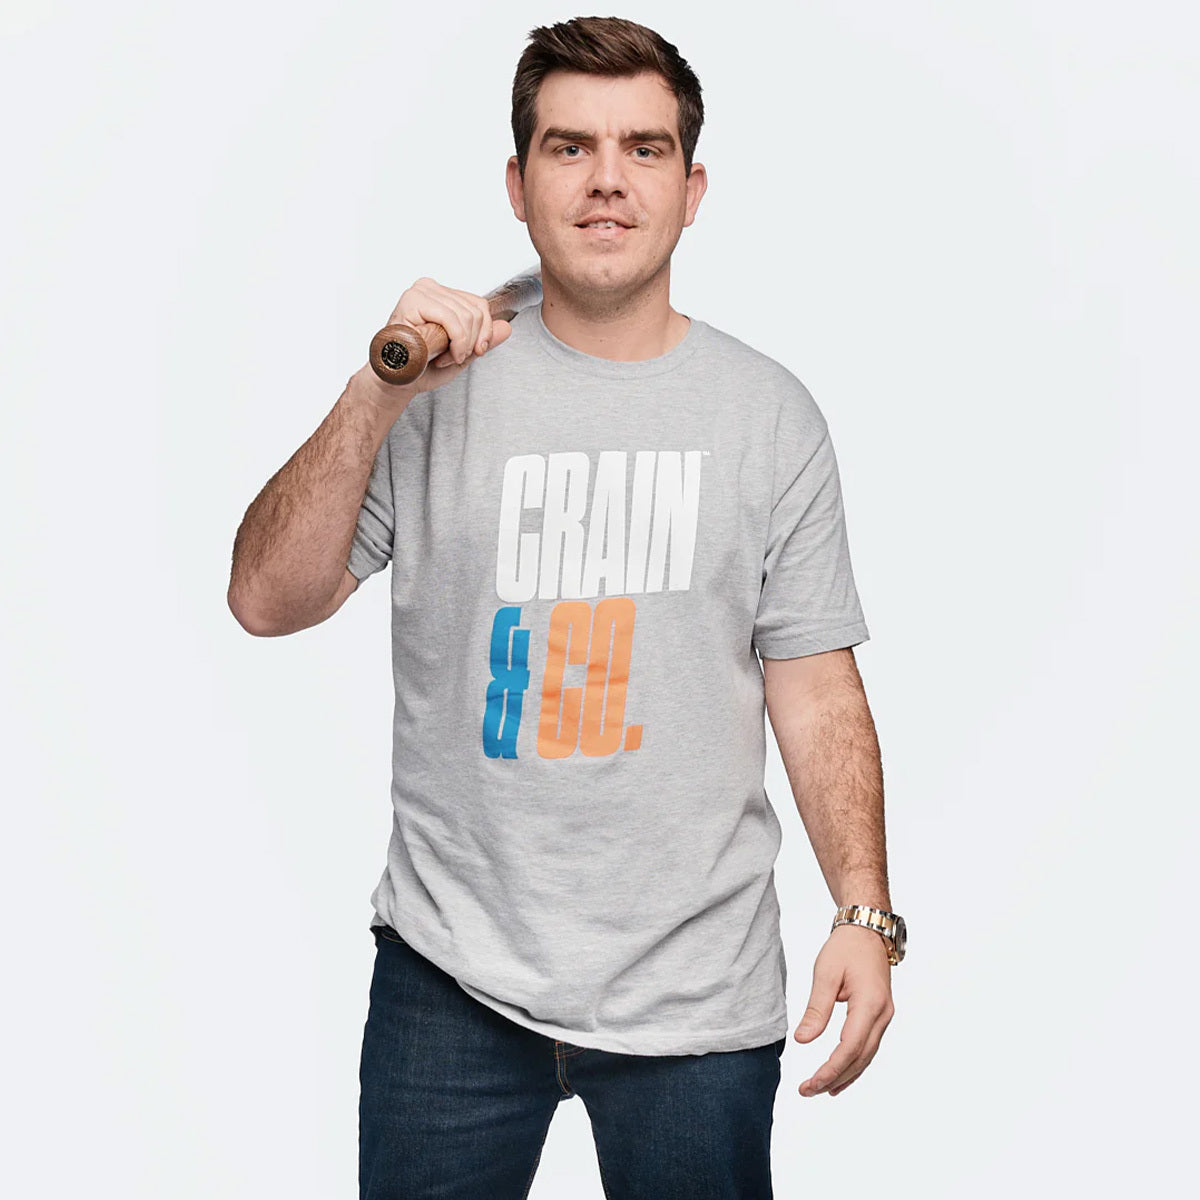 Crain & Company T-shirt